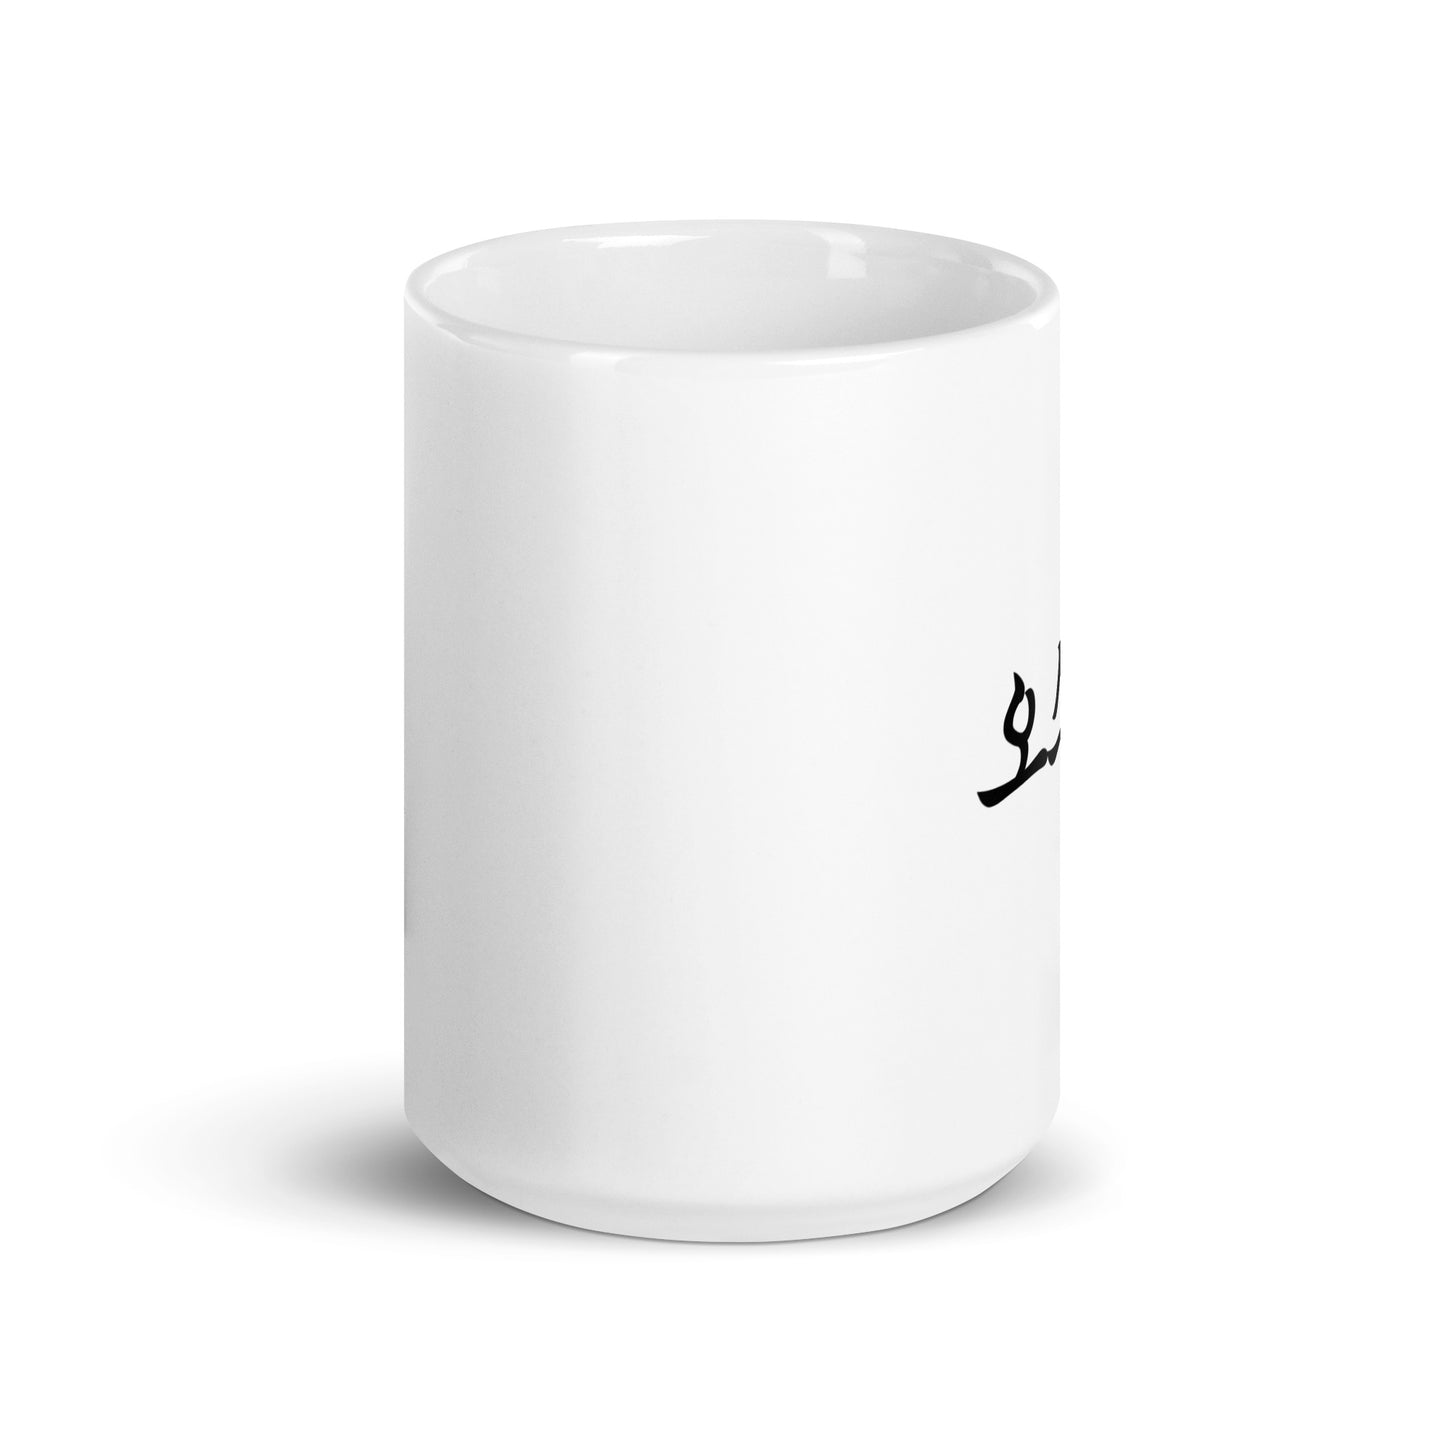 Austin in Hangul Custom Name Gift Ceramic Mug